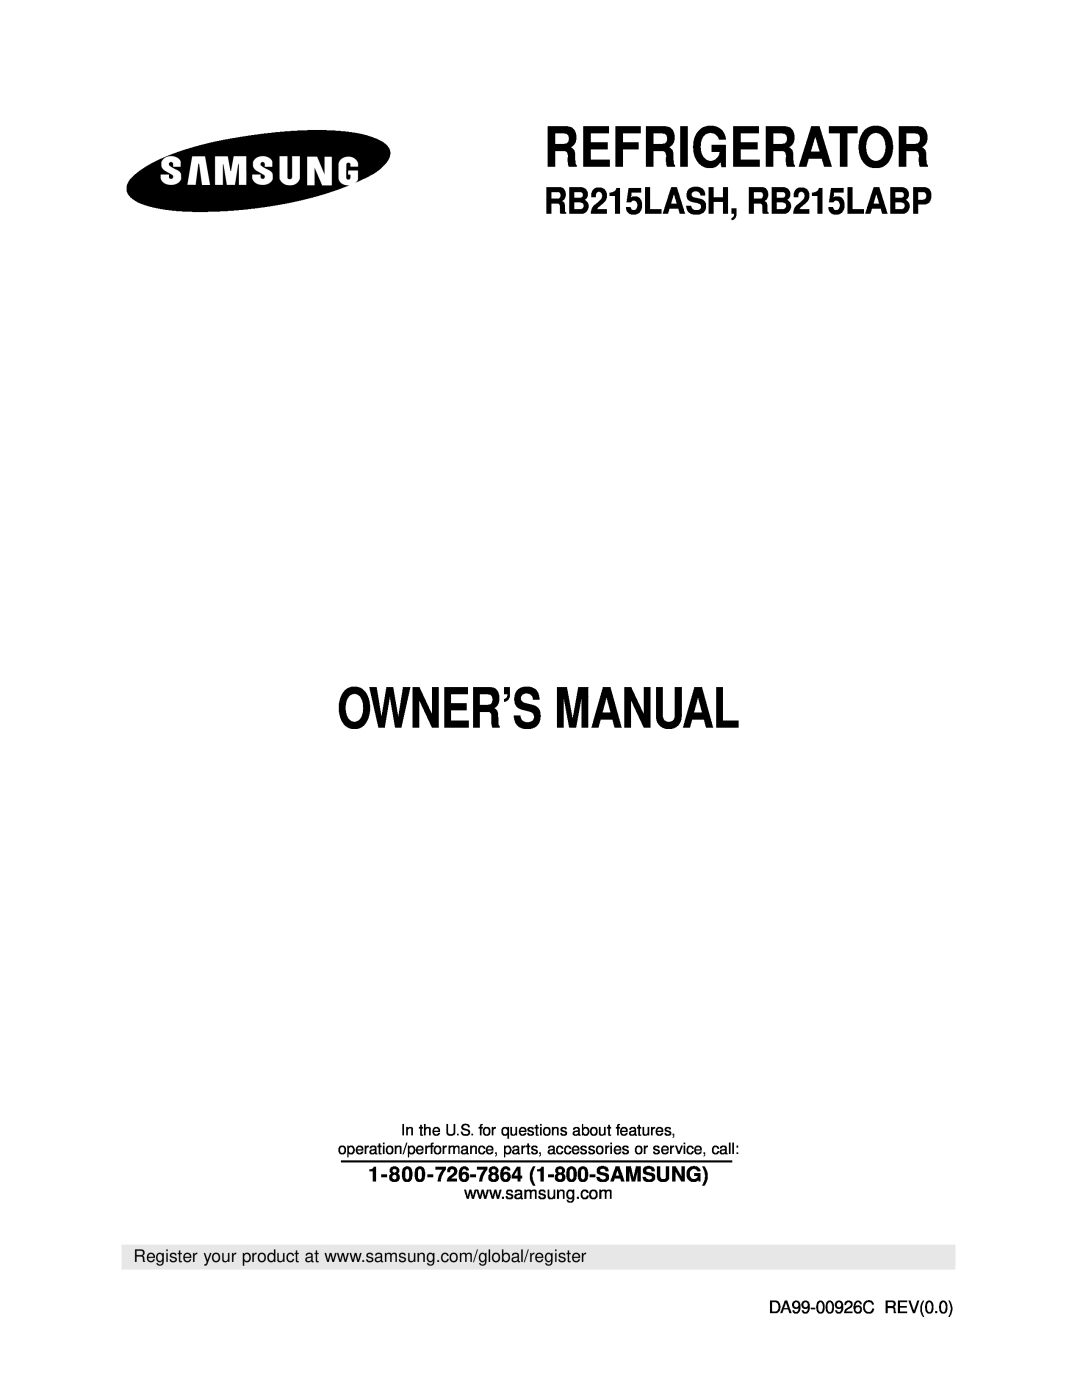 Samsung owner manual Refrigerator, RB215LASH, RB215LABP 